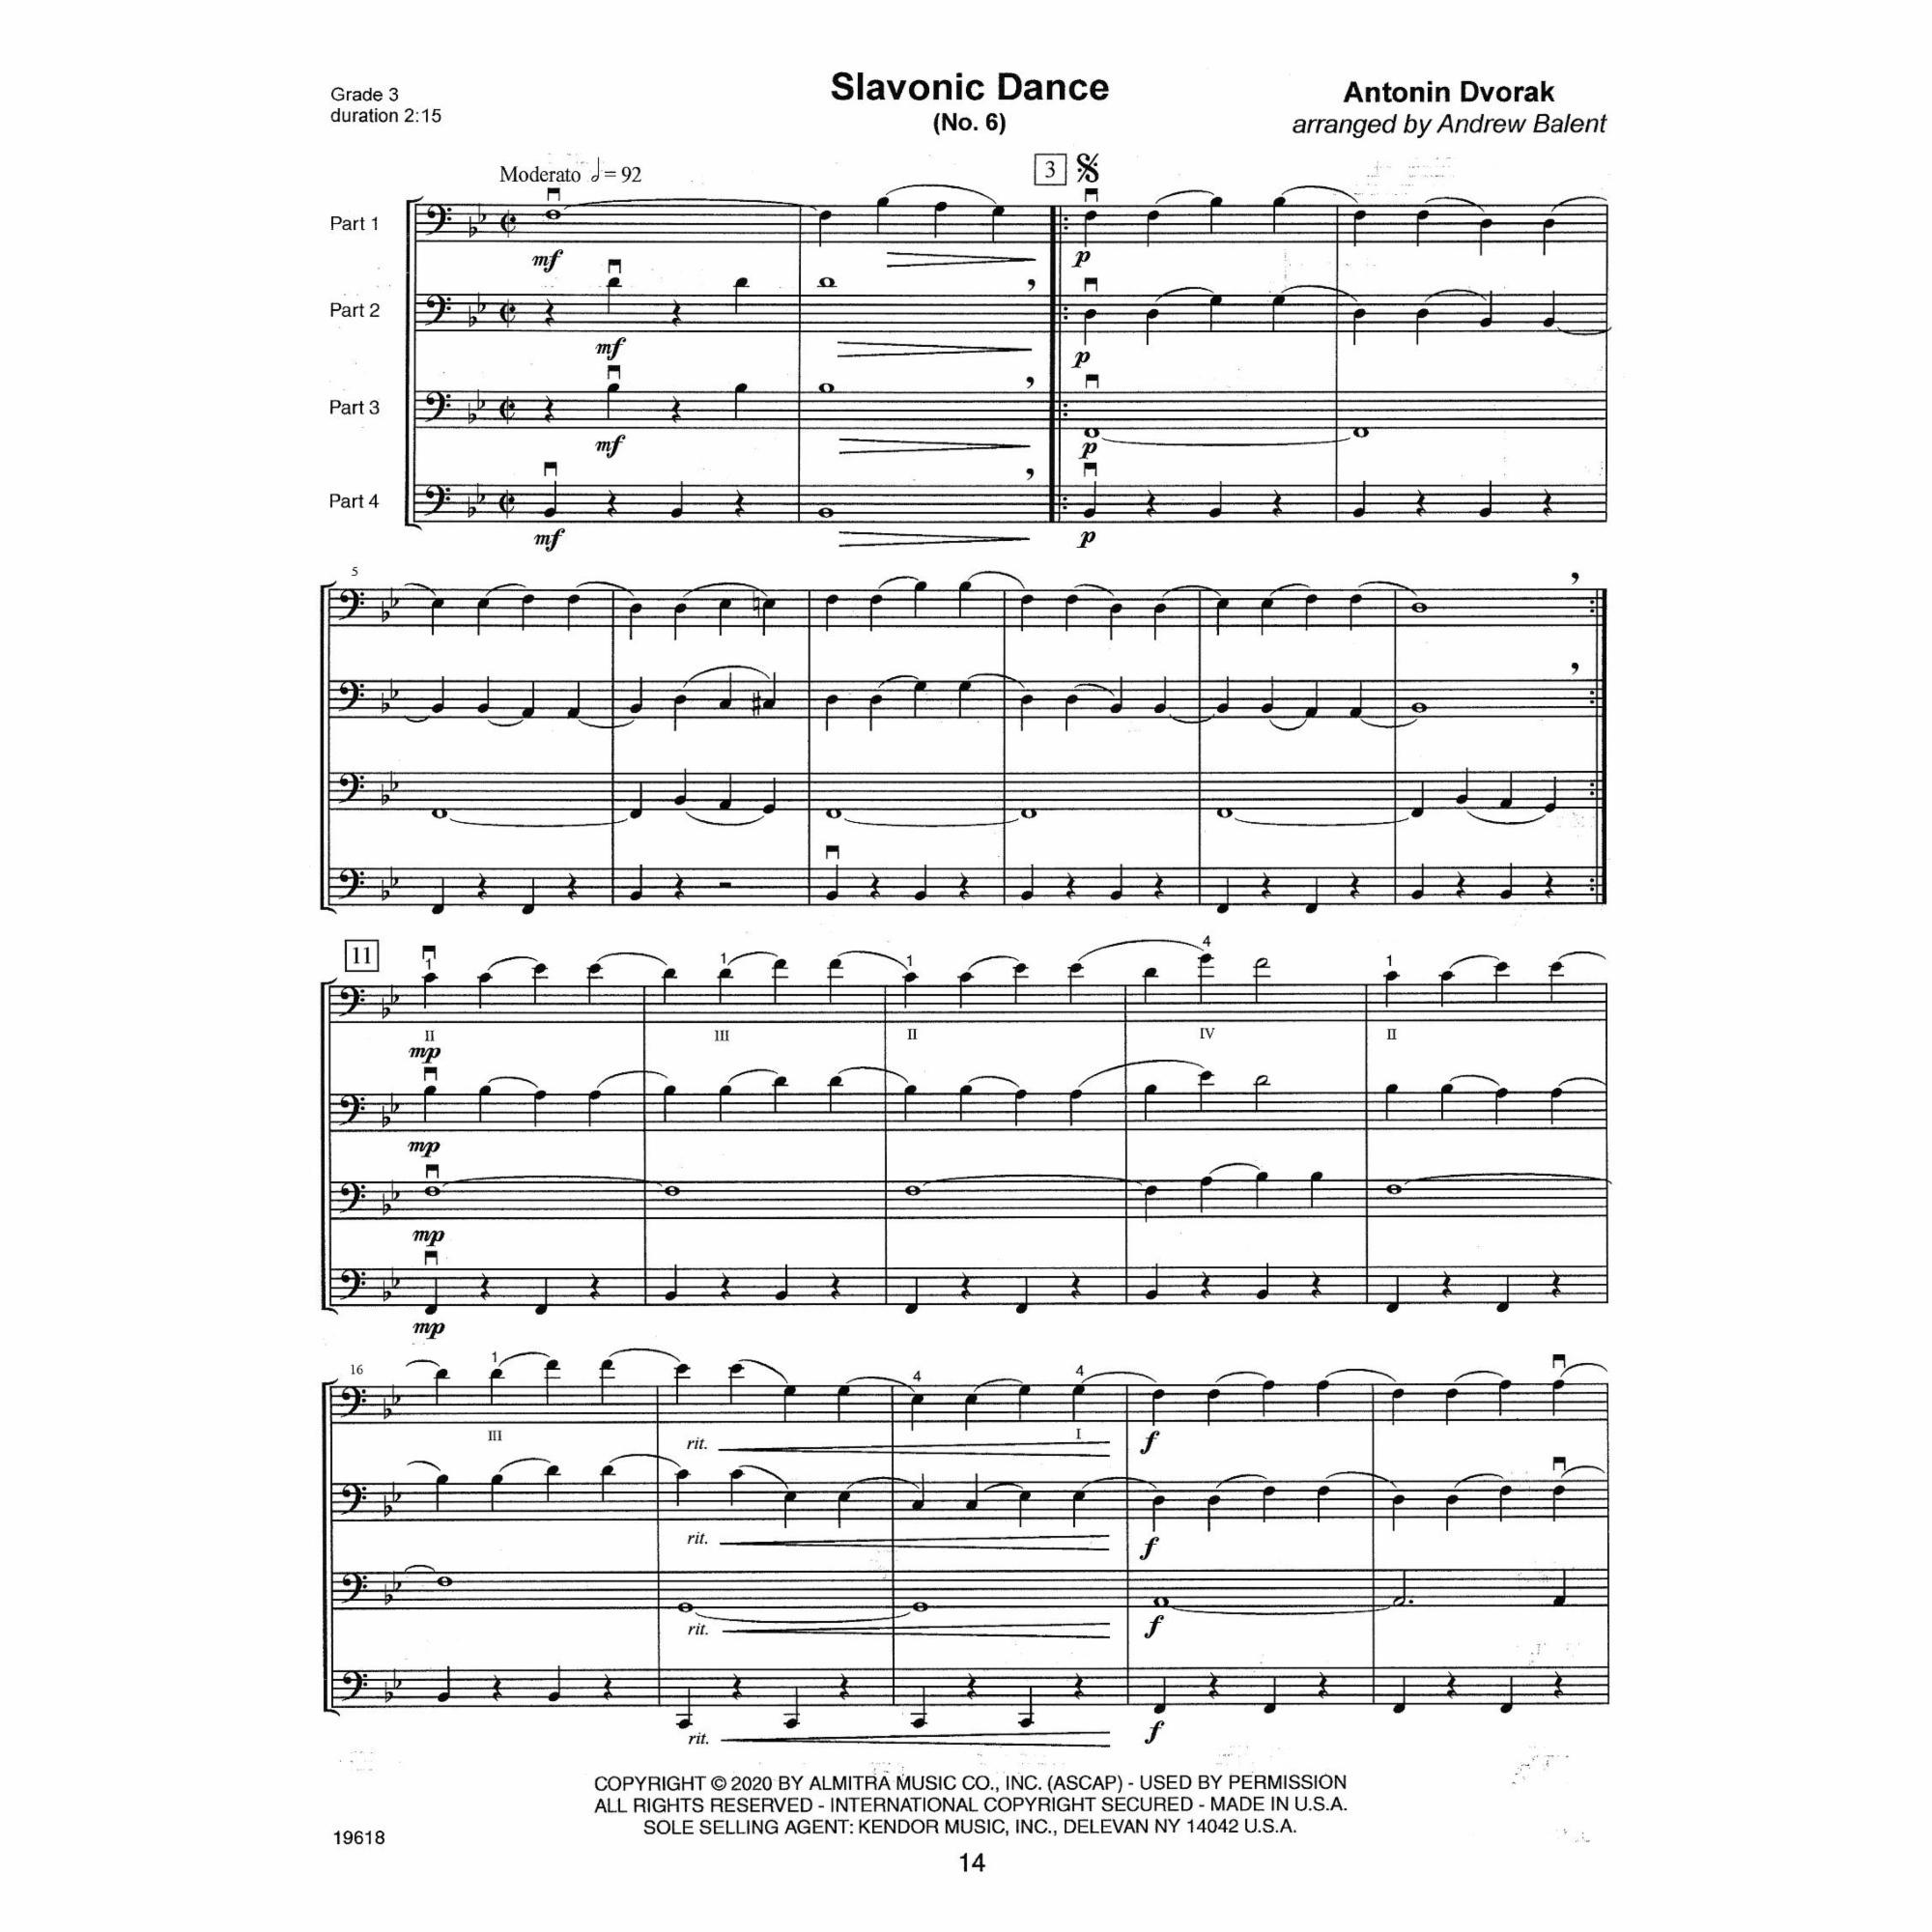 Sample: Four Cellos (Pg. 14)